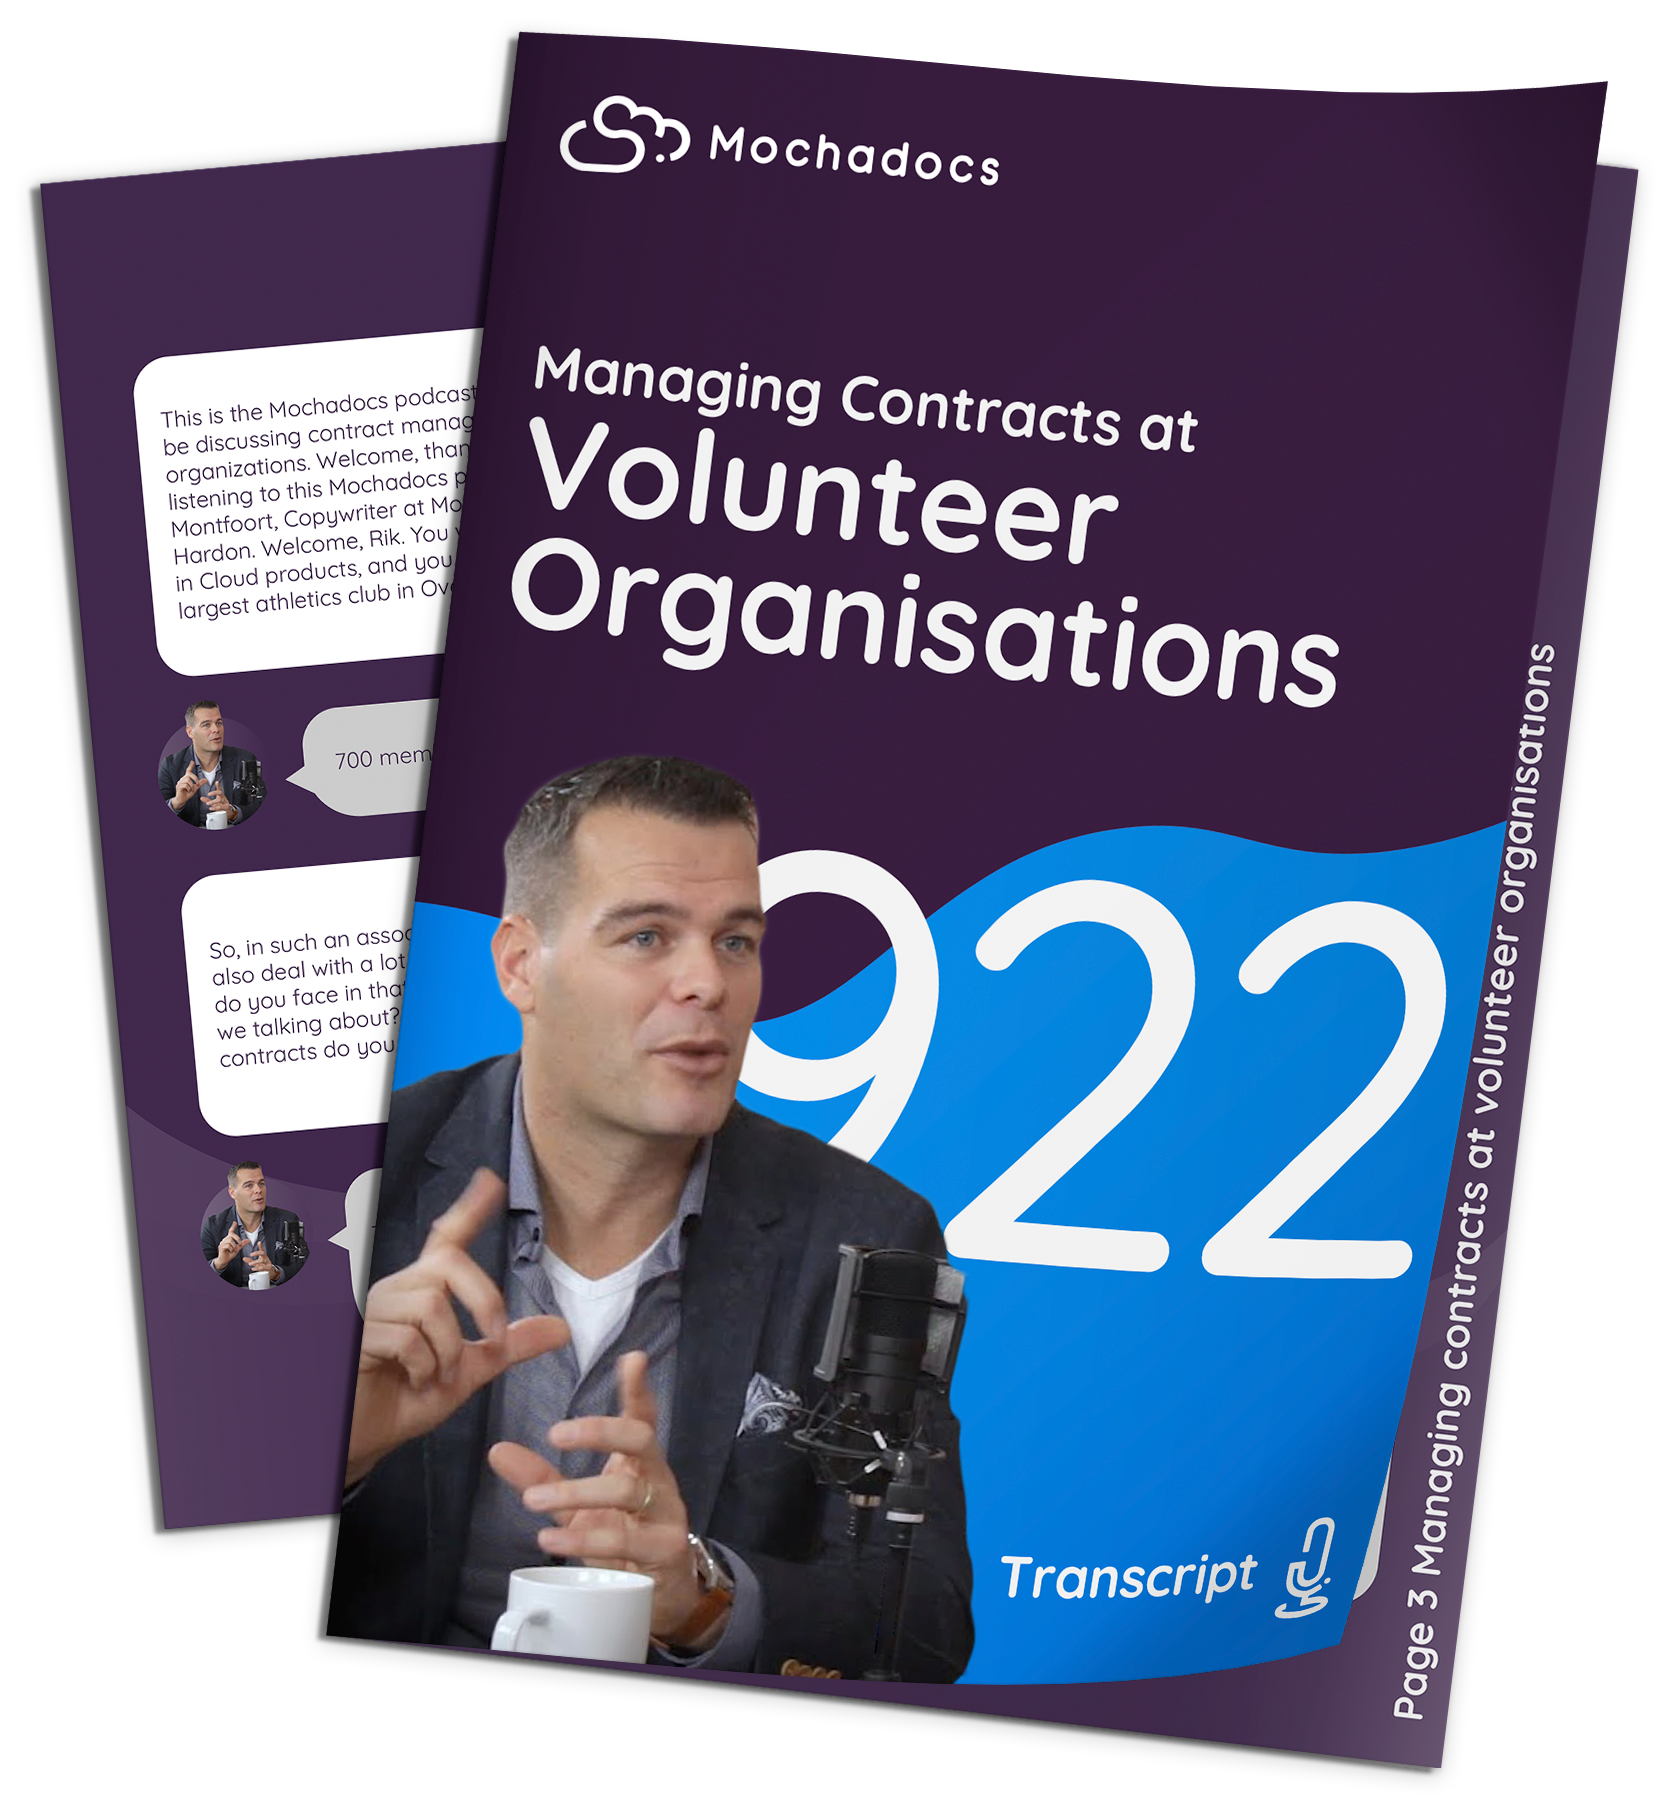 Mochadocs - Contract Management - Transcripts - Managing contracts at a volunteer organisations